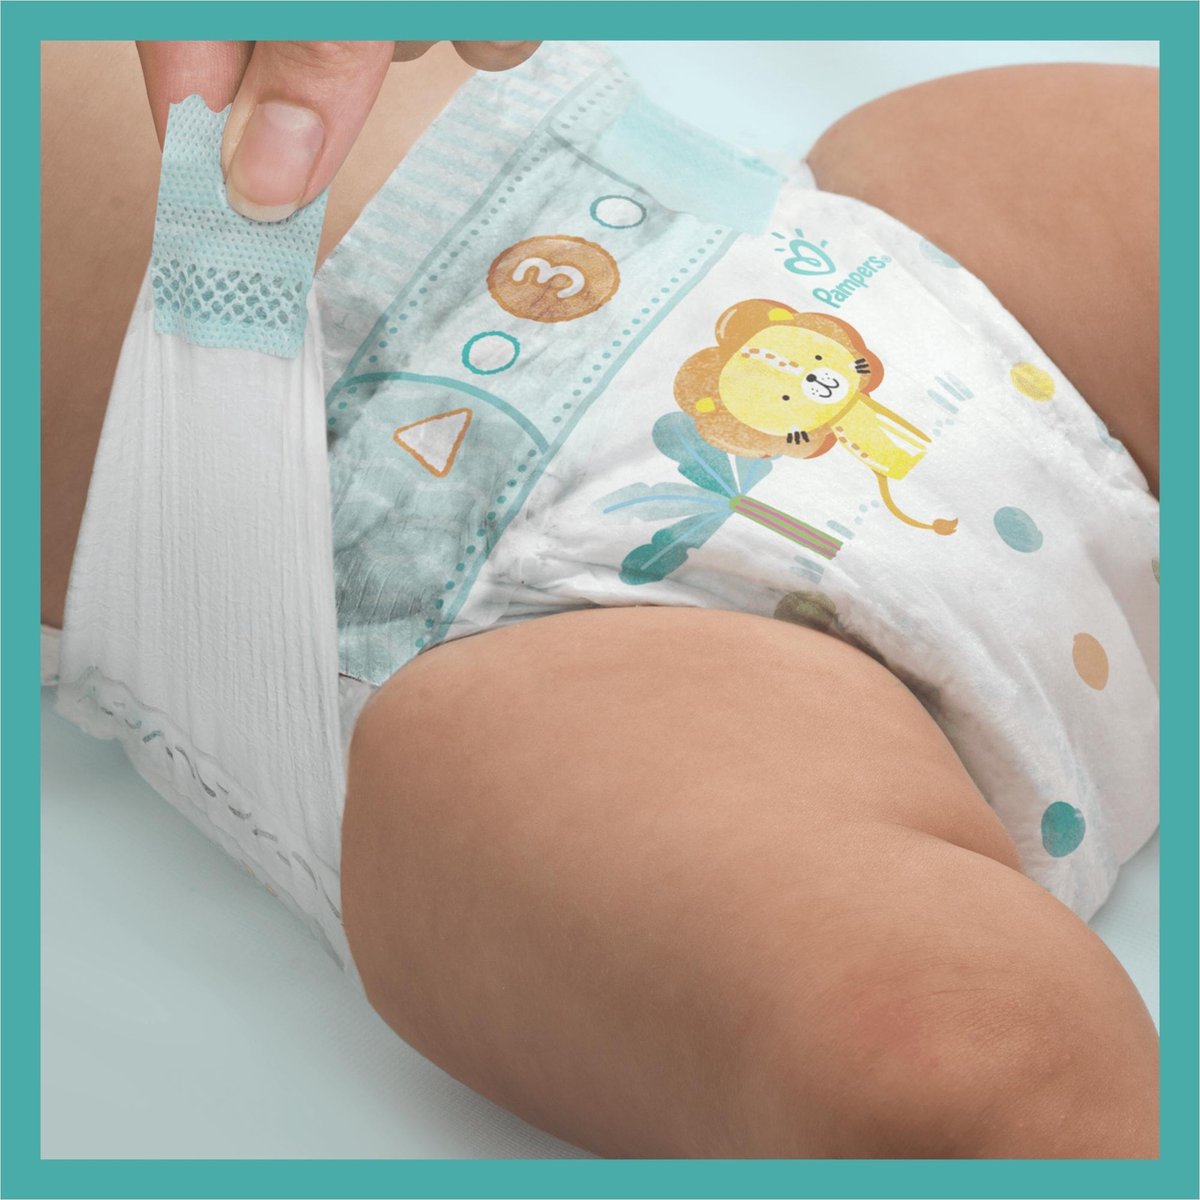 Of later Gunst Groenteboer Pampers Baby Dry Newborn maat 1 - 21 stuks | bol.com